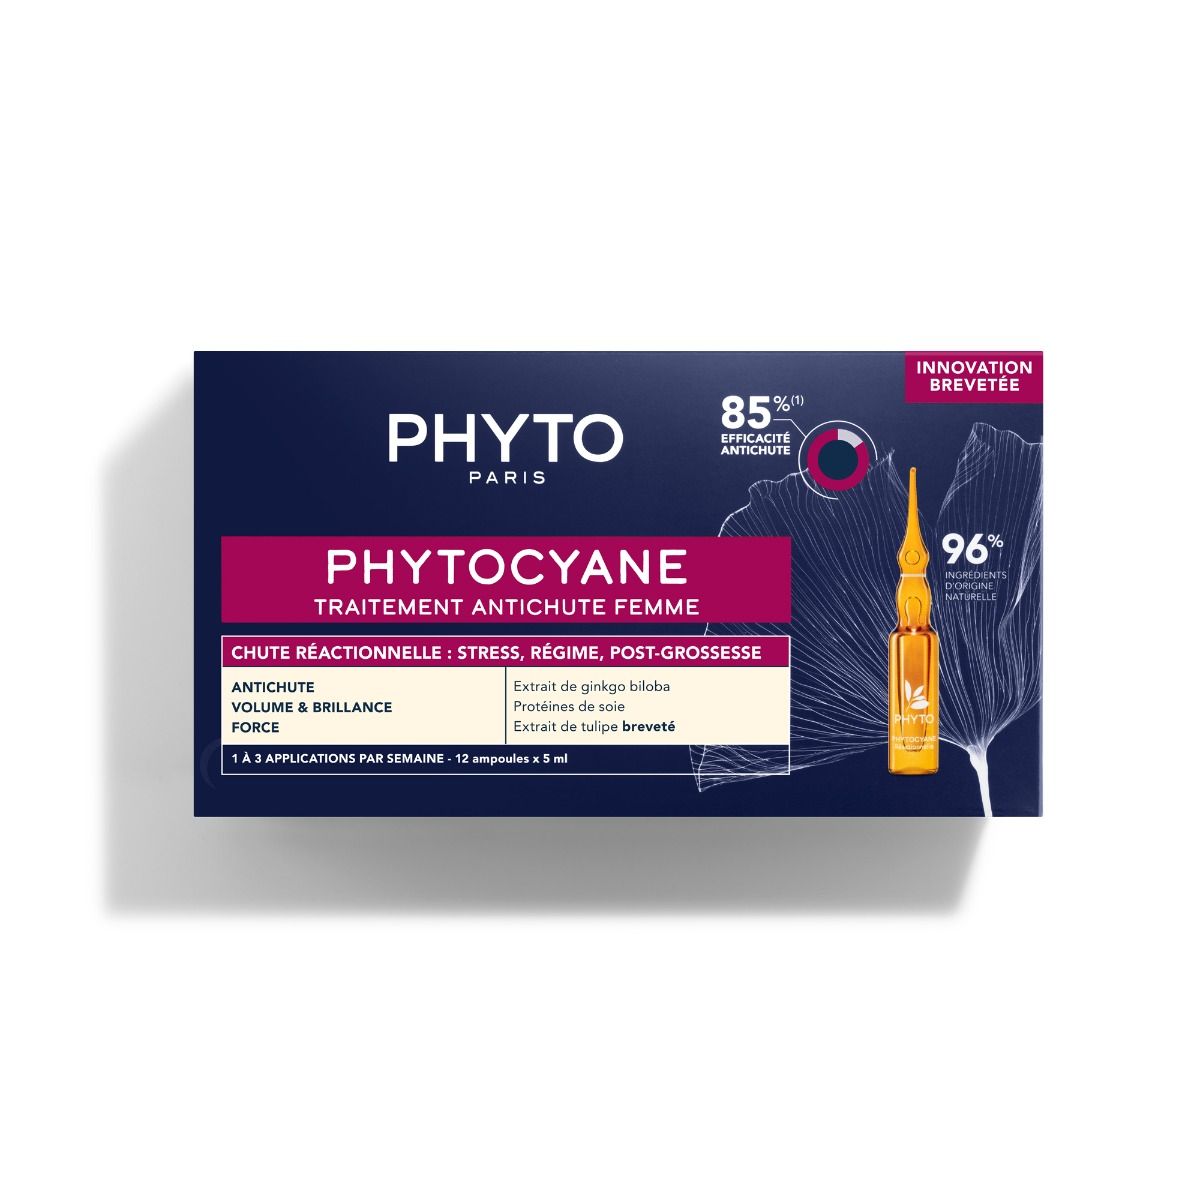 PHYTOCYANE ANTI HAIR LOSS TREATMENT FOR WOMEN